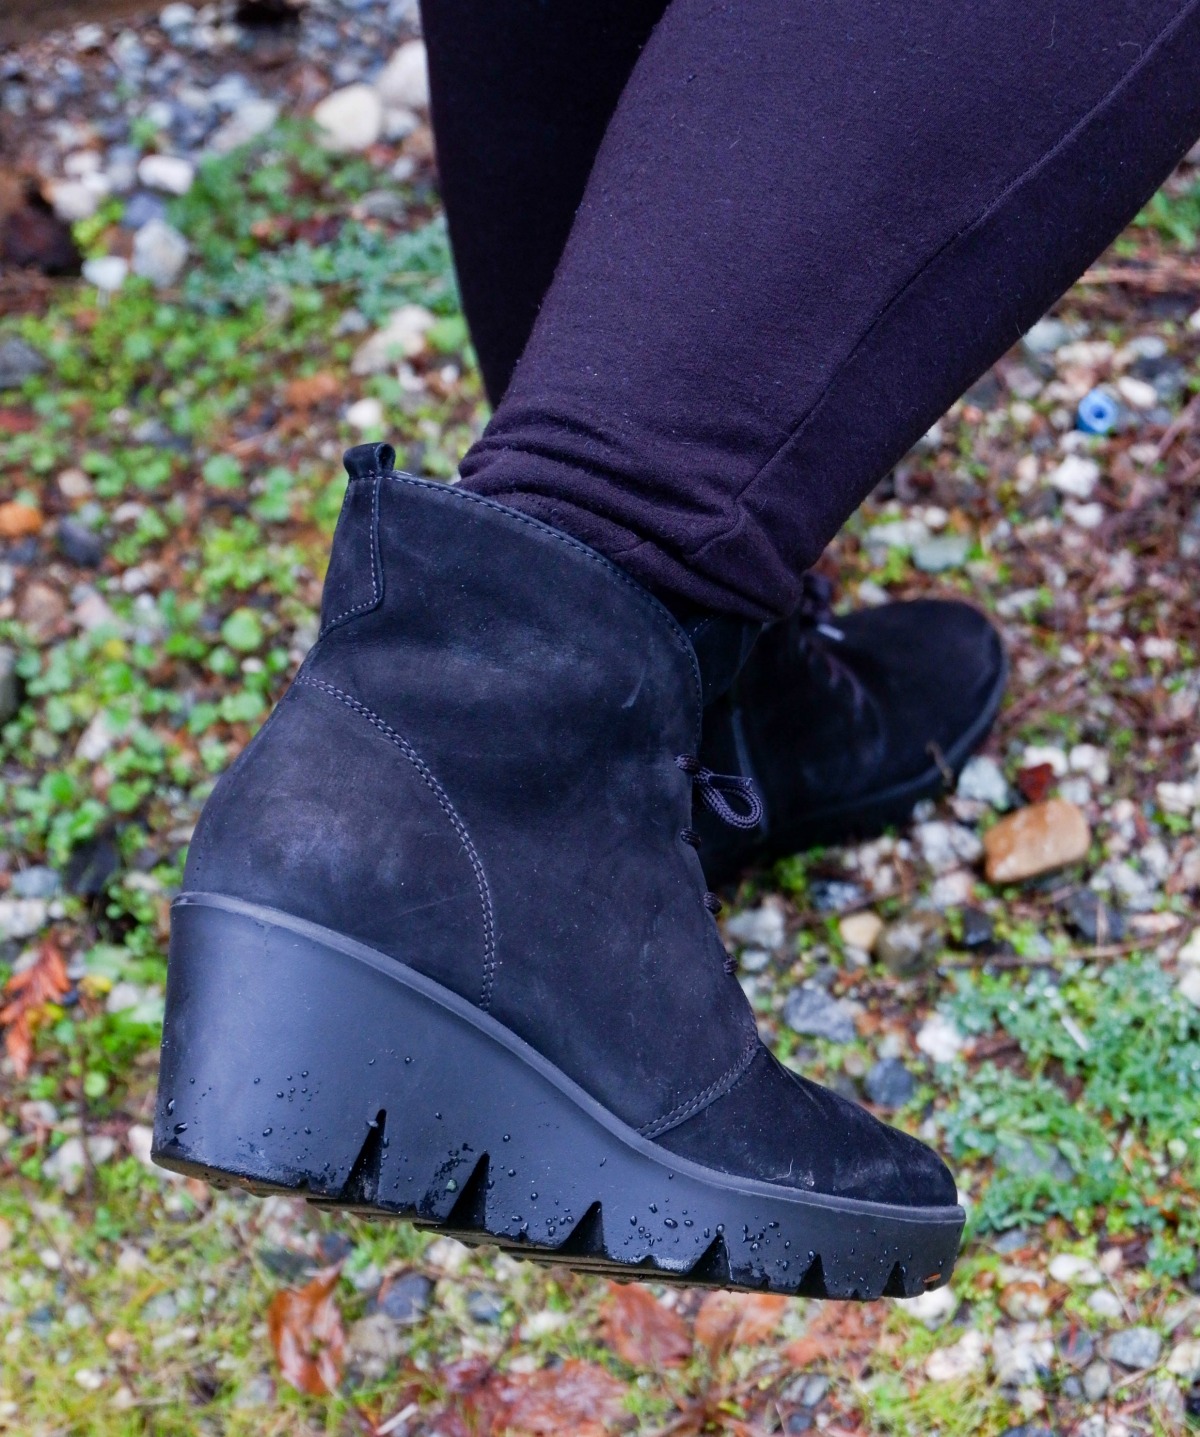 Waldlaufer Women's Effie Wedge Ankle Boot